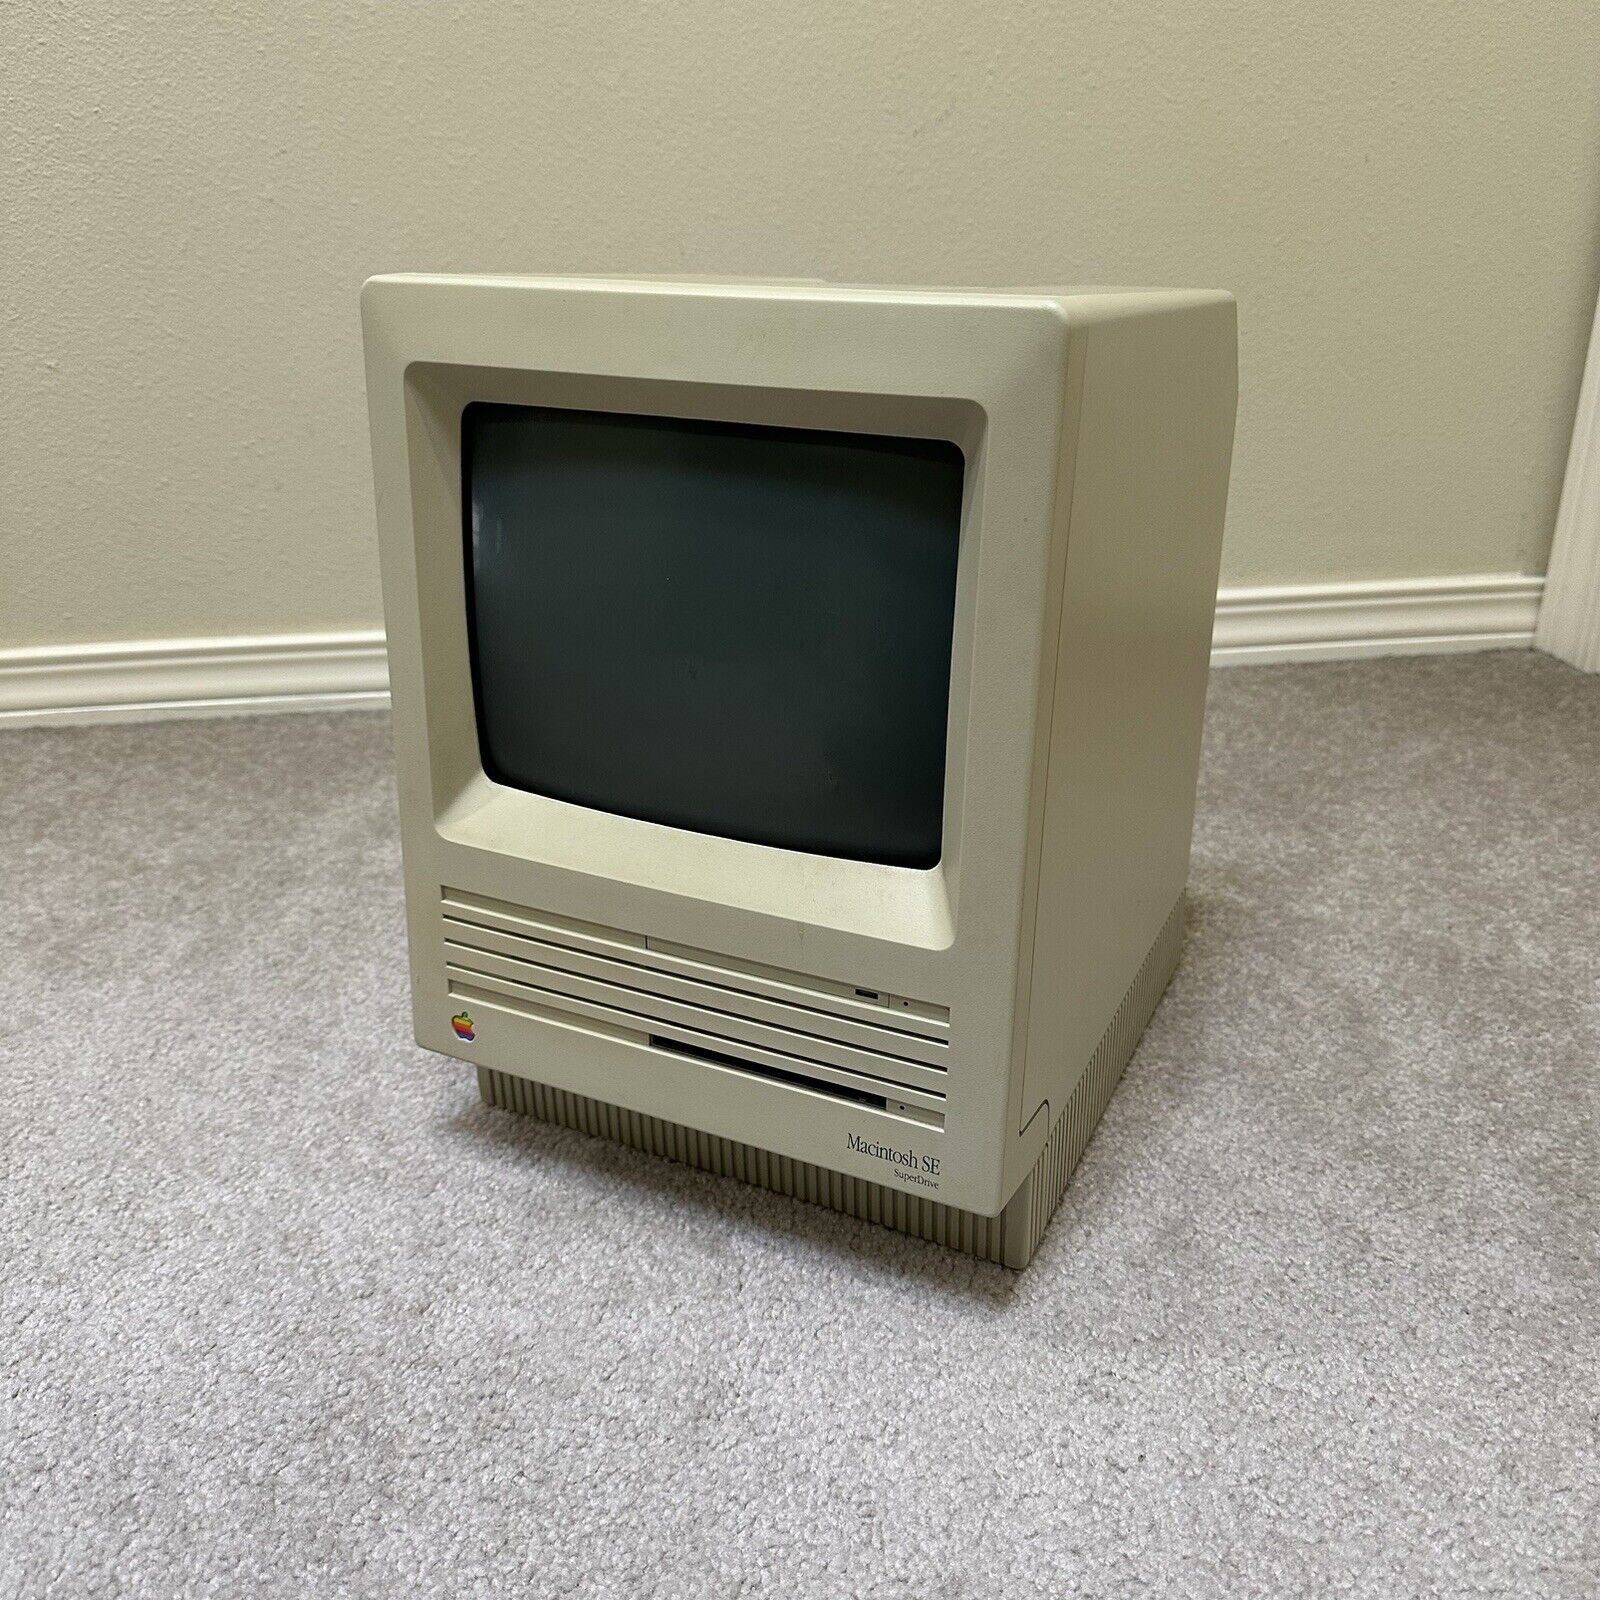 Apple Macintosh SE M5011 Vintage Retro Desktop PC Computer System Turns On